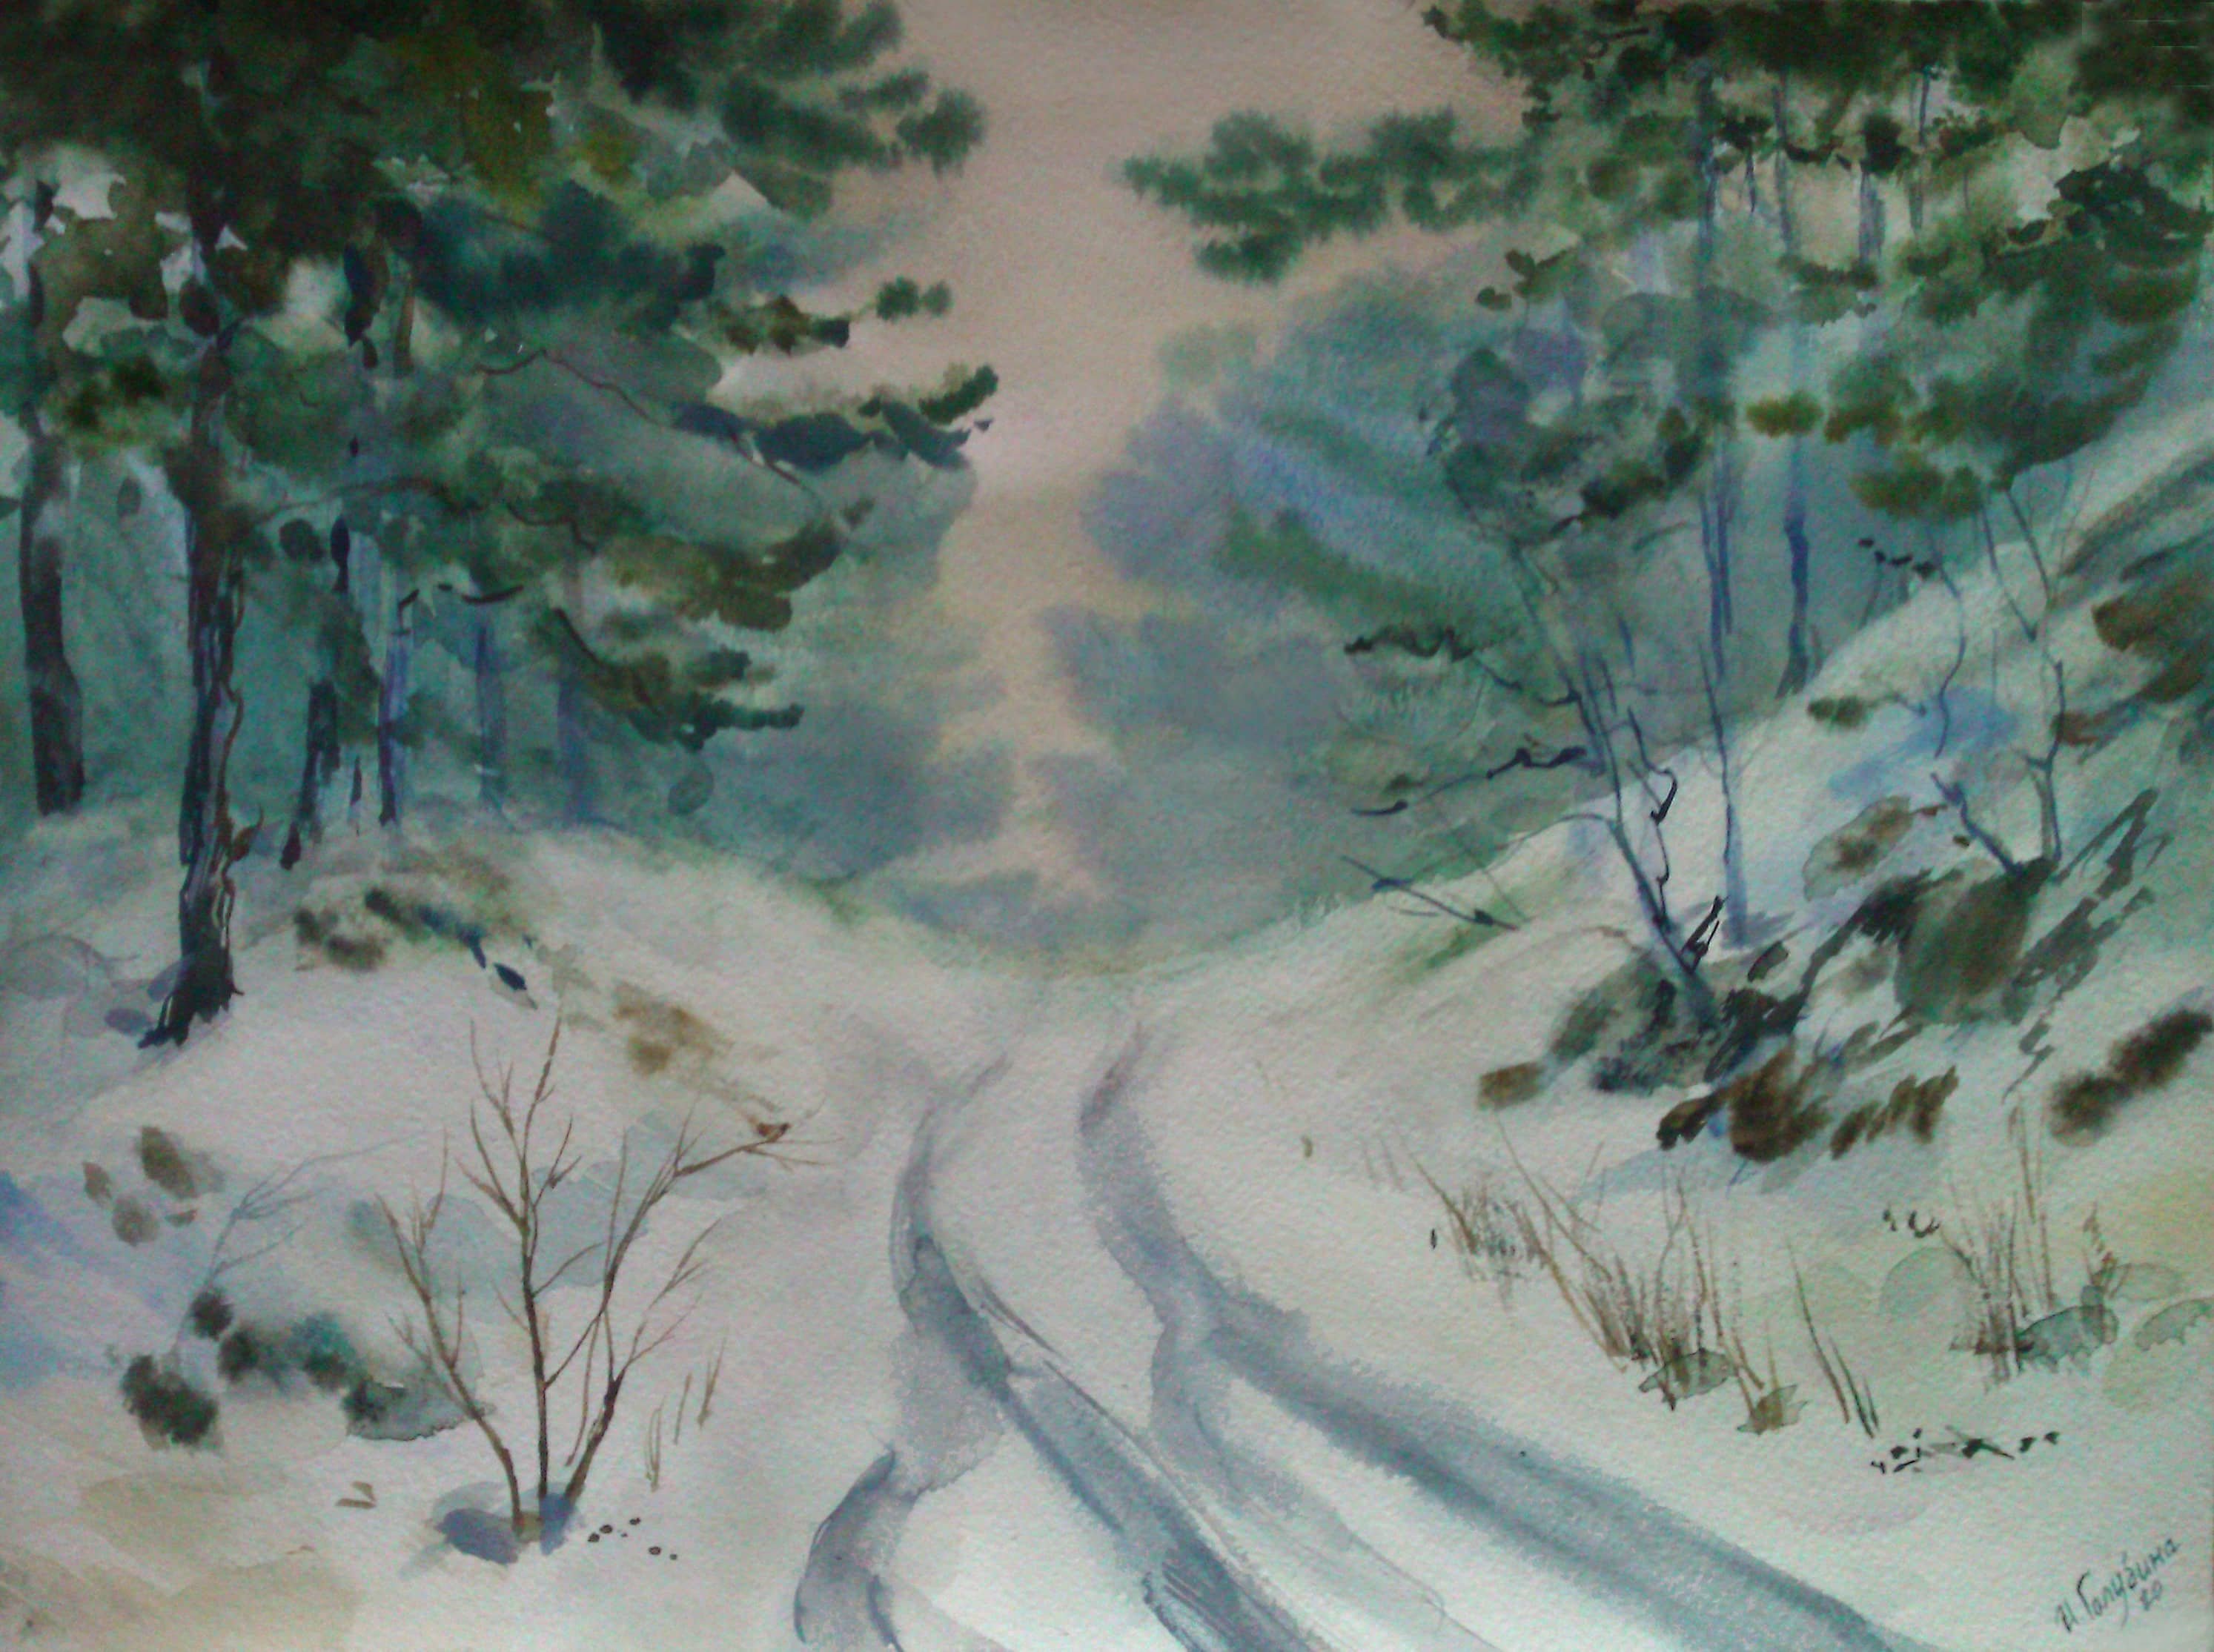 Иллюстрация к стиху Пушкина зимняя дорога